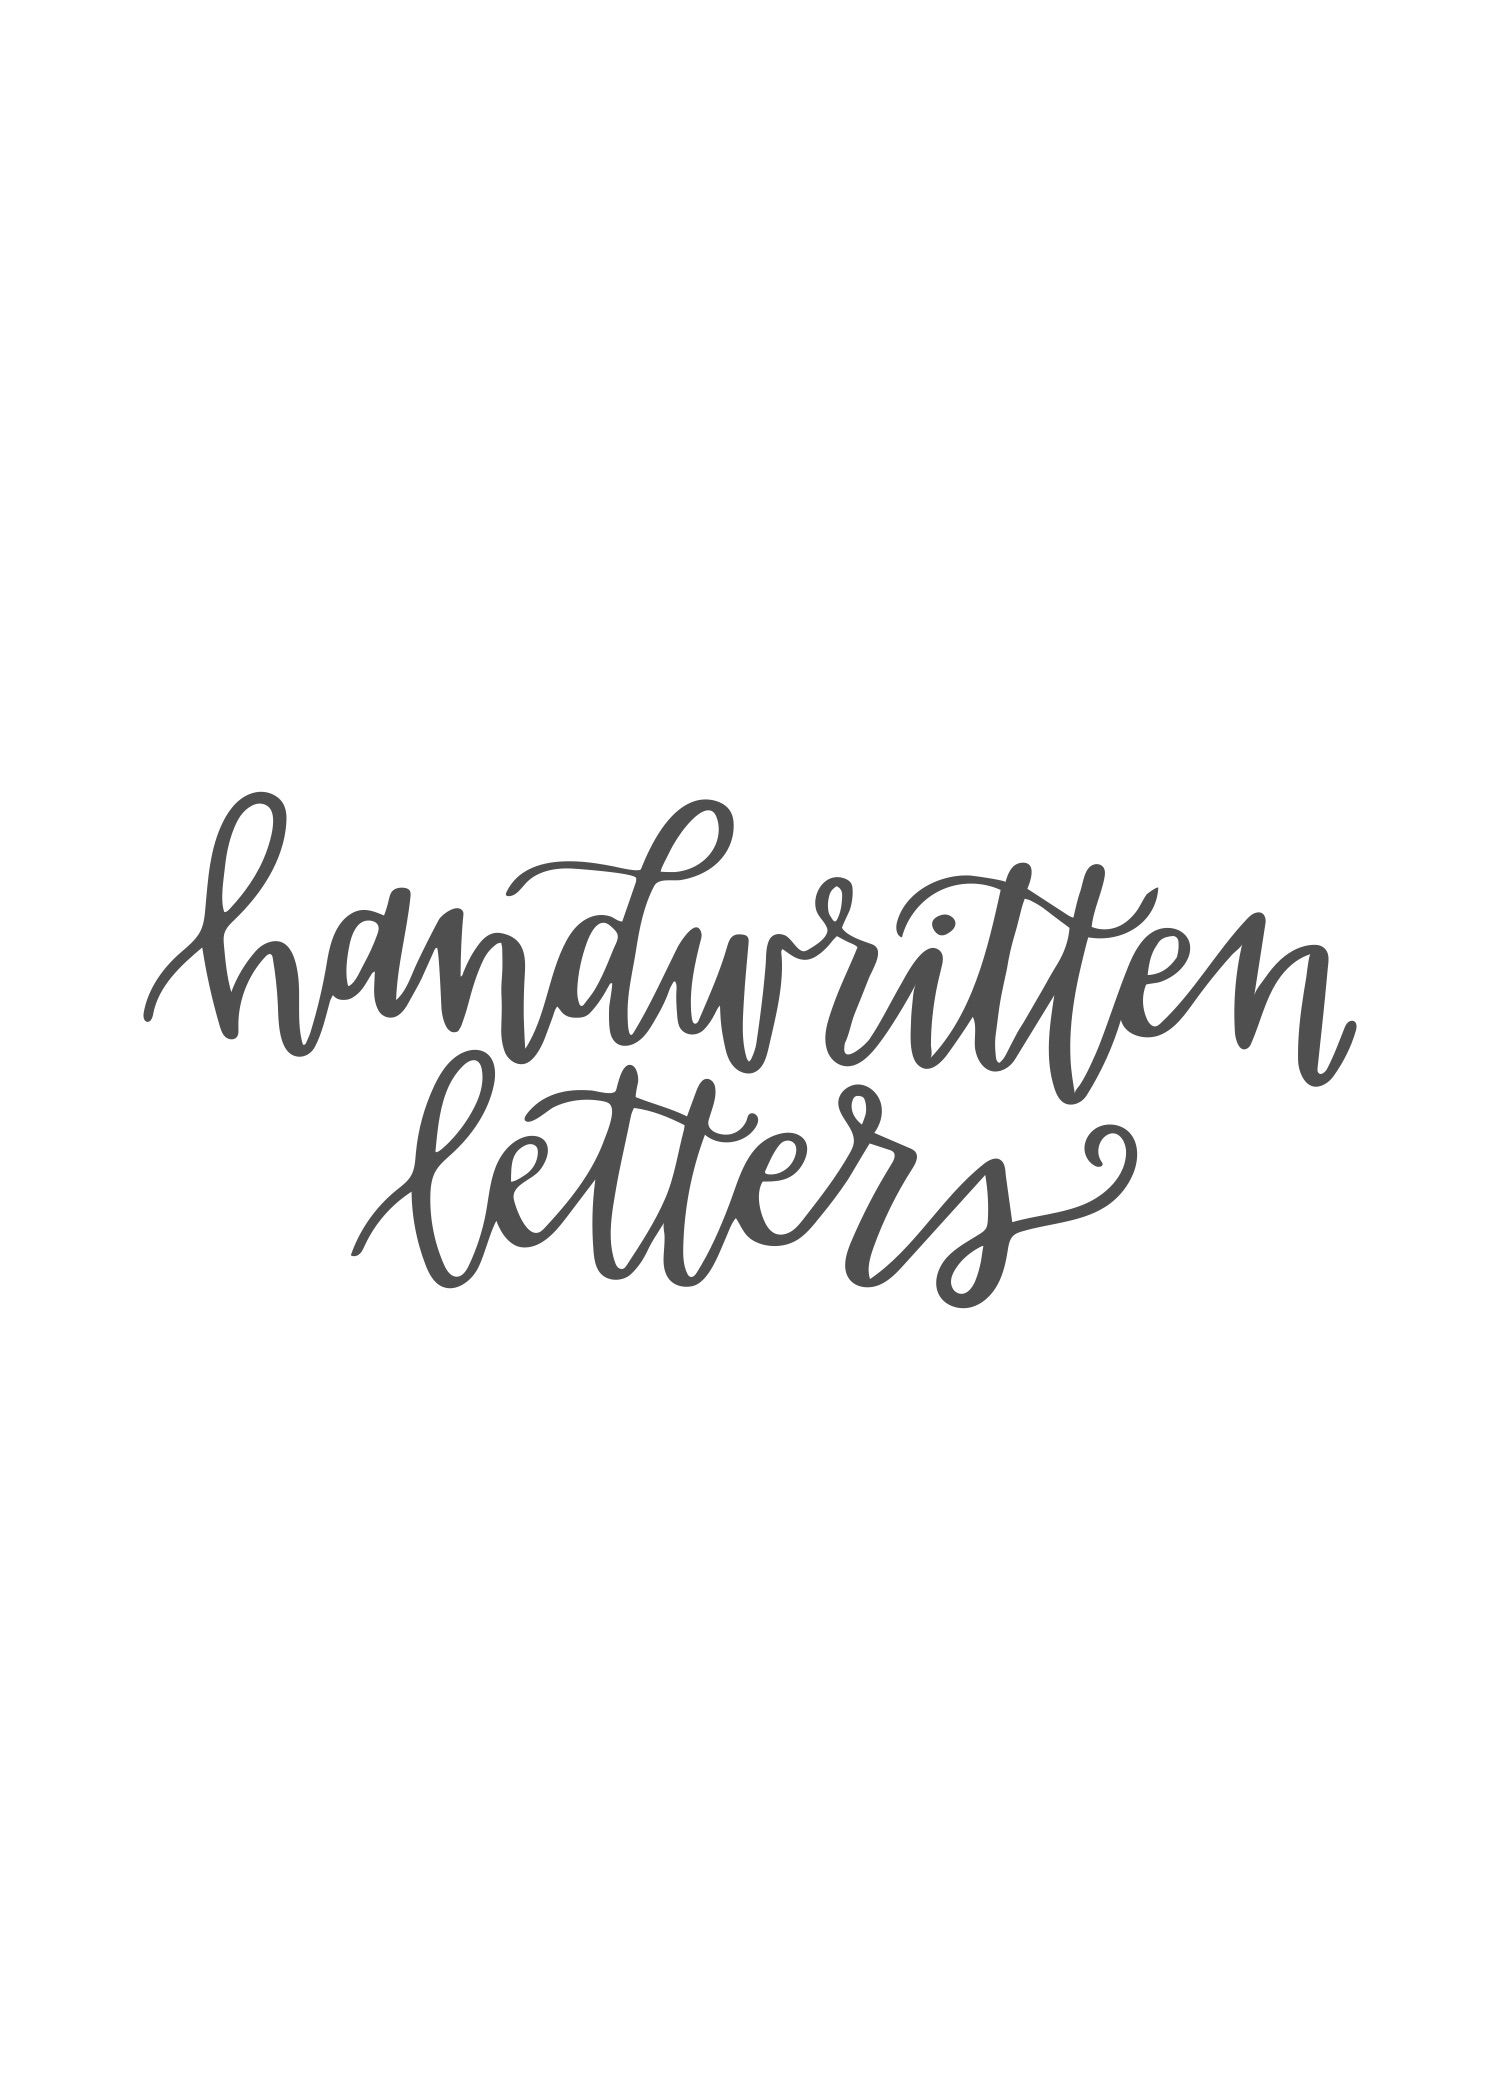 "handwritten letters" in calligraphy